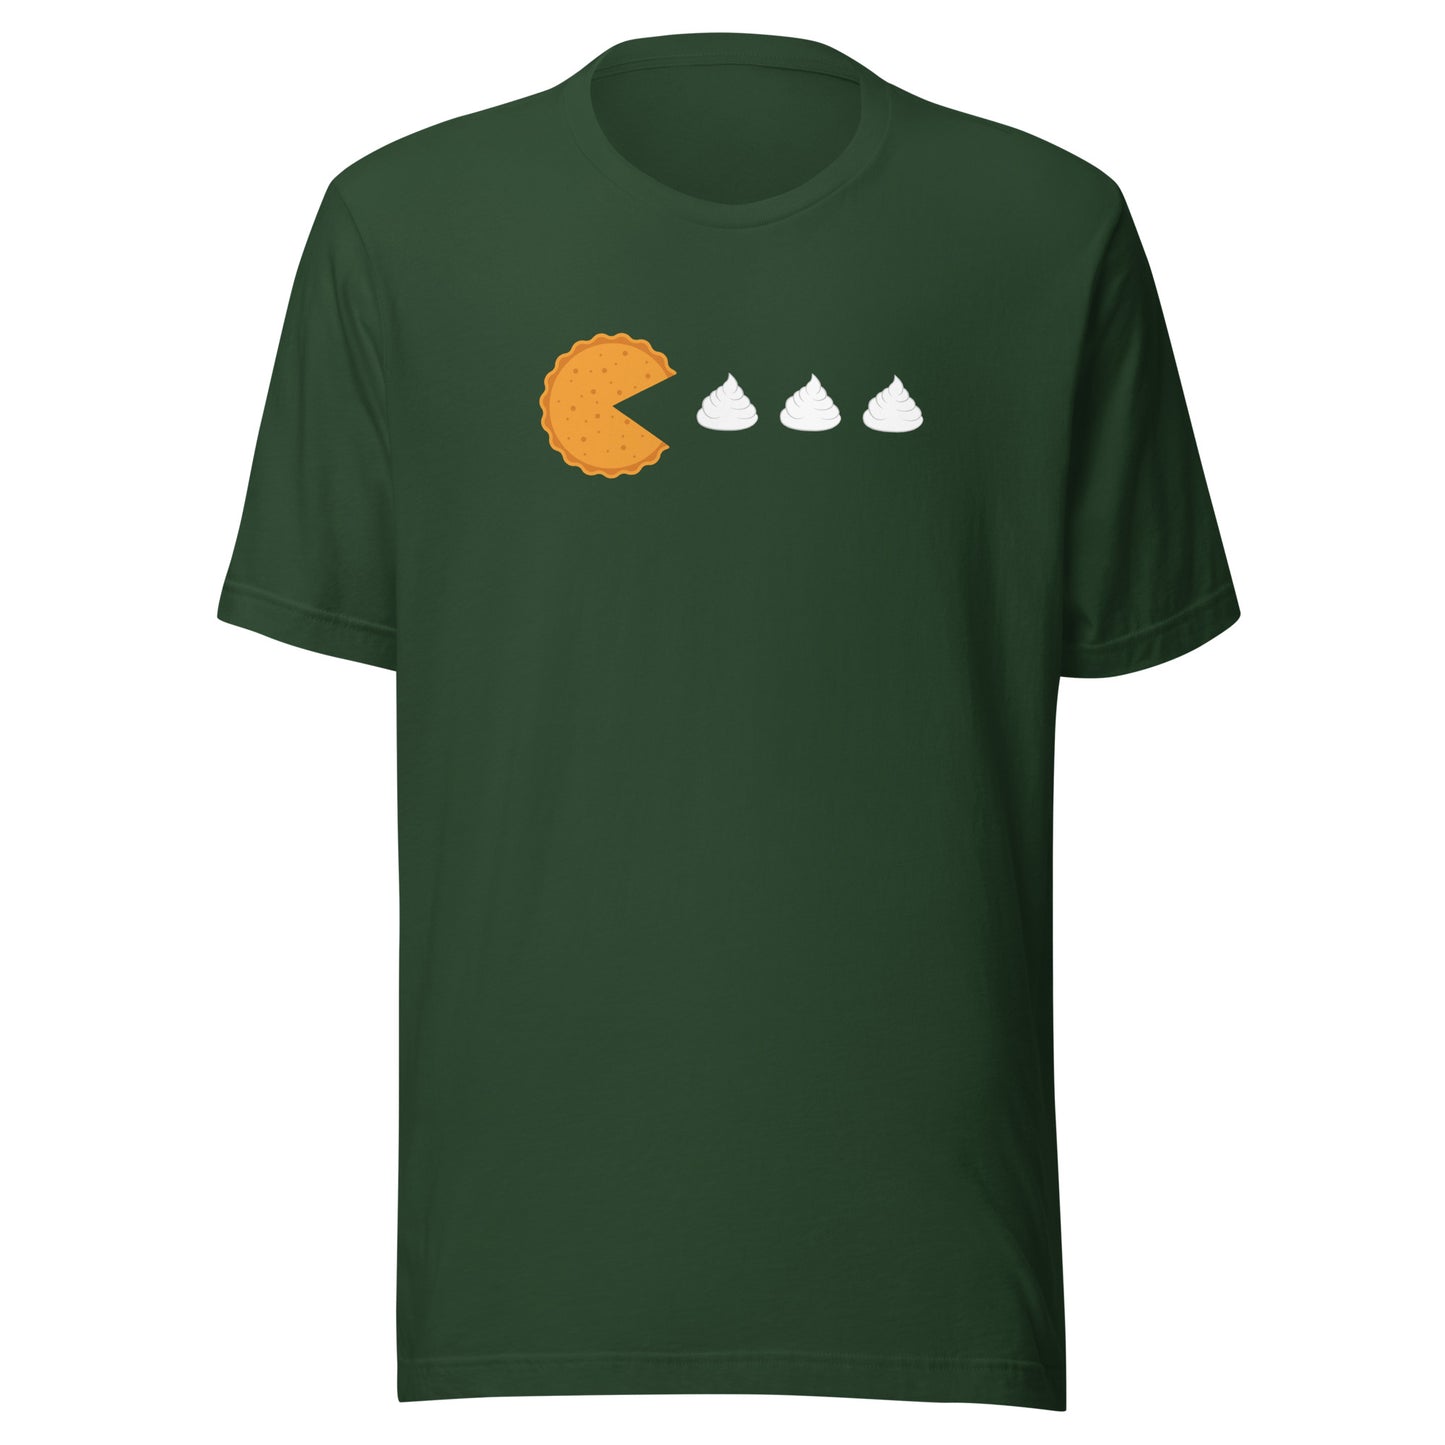 Retro Pie Video Game T-Shirt